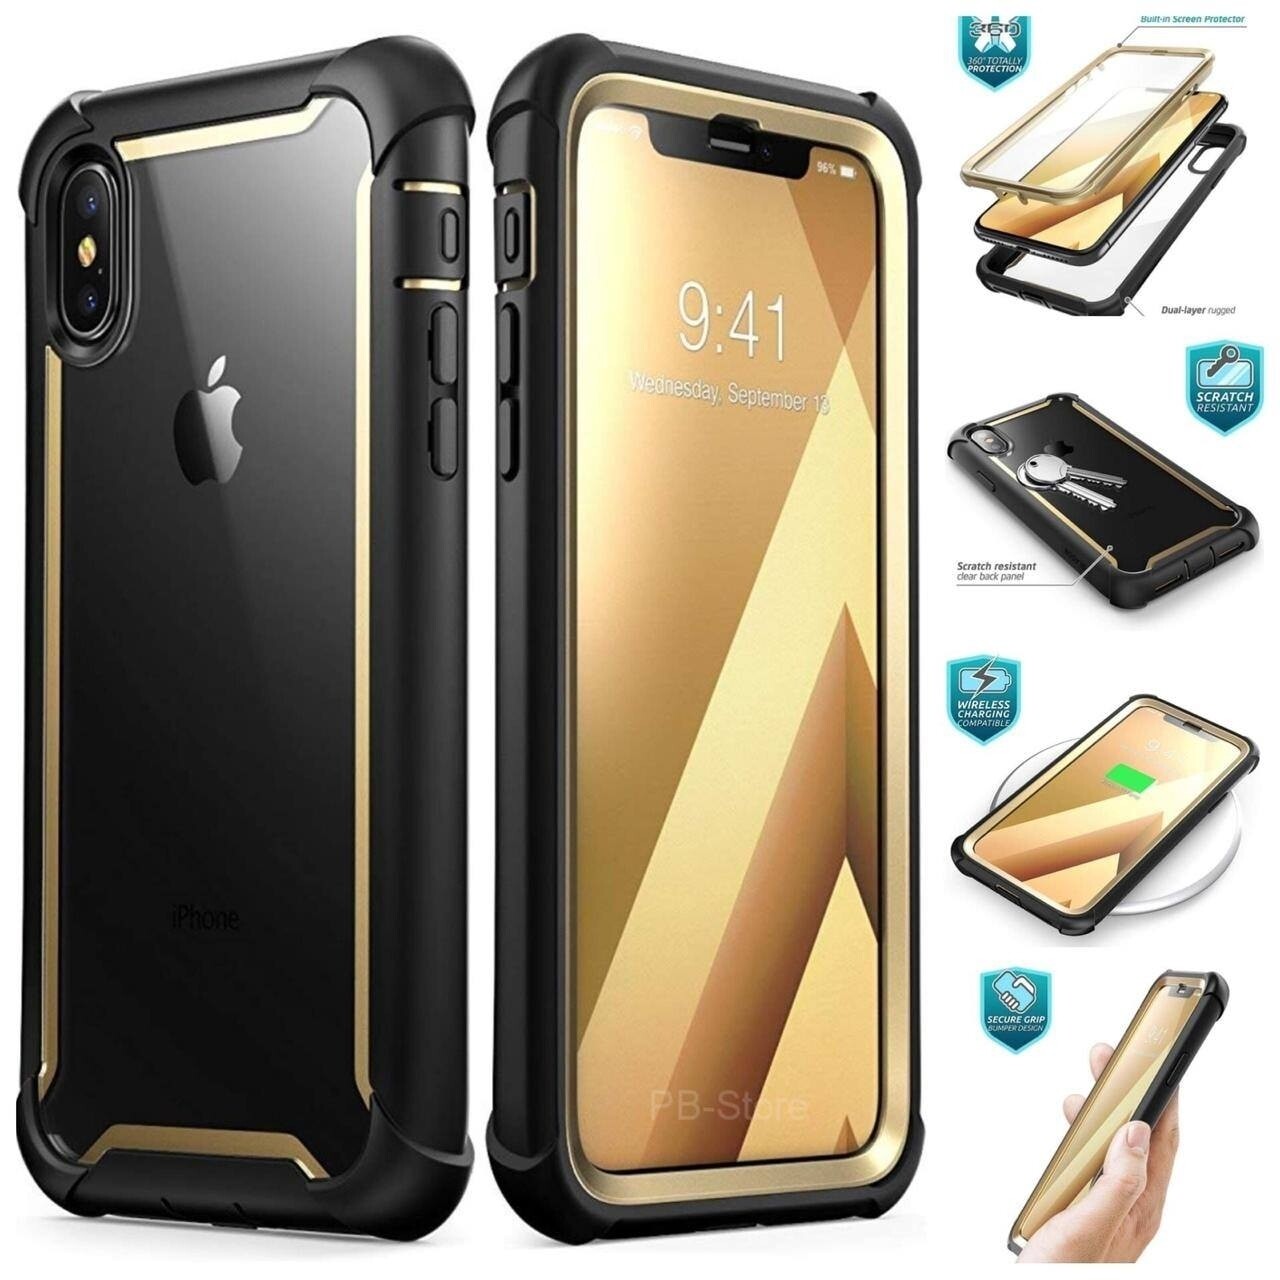 Case Iphone XS Max Ares Gold protector de cubierta completa y tapa trasera transparente